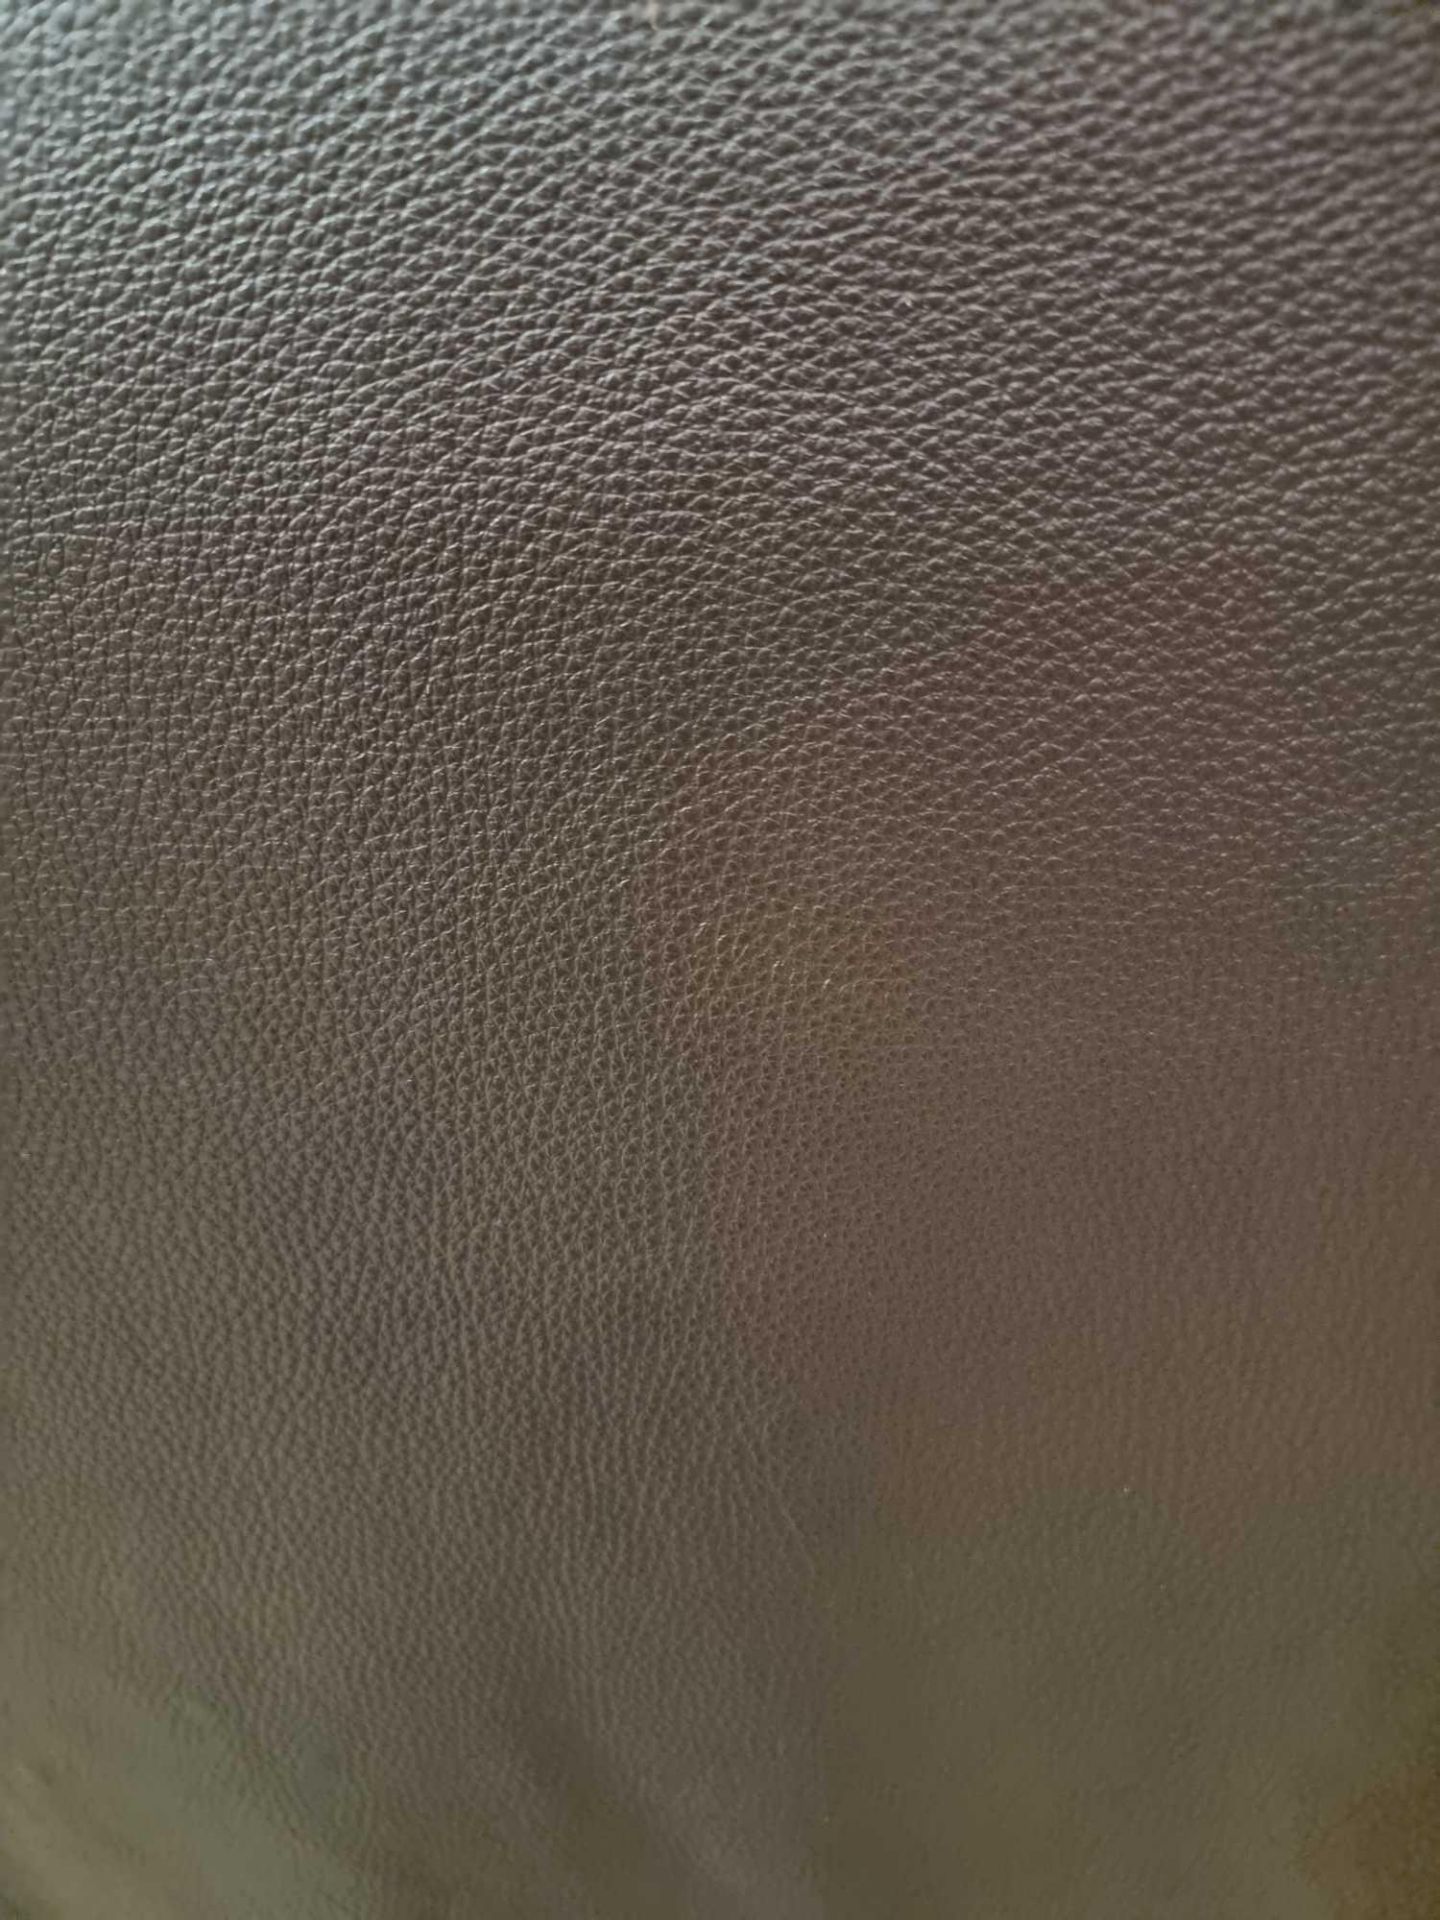 Mastrotto Mustang Bourneville Leather Hide approximately 3 96M2 2 2 x 1 8cm ( Hide No,148) - Bild 2 aus 3